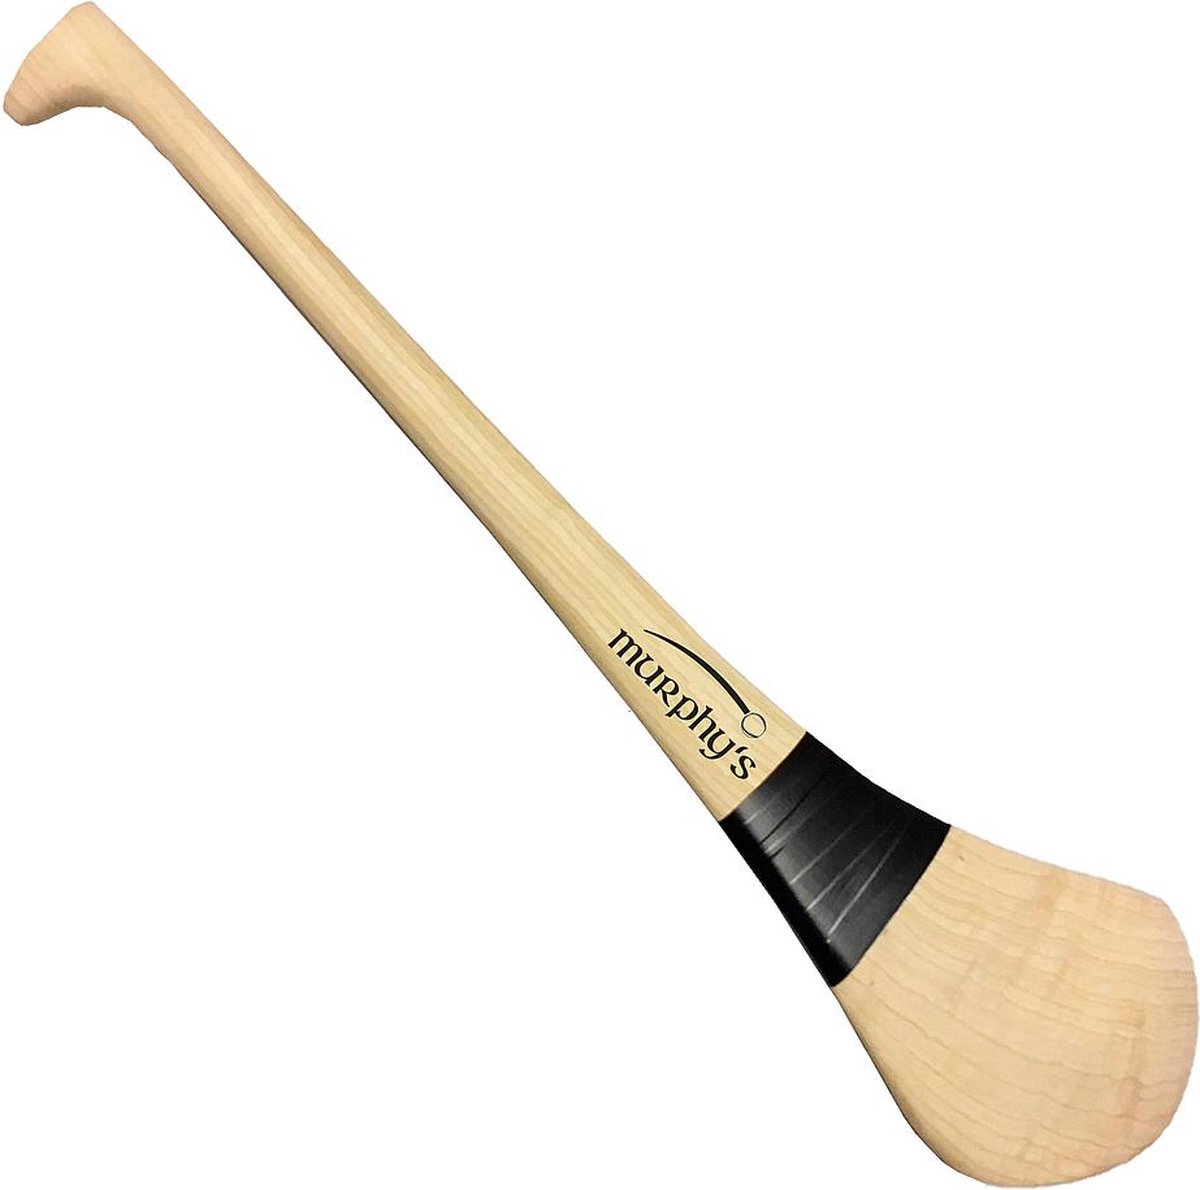 Murphy's Wexford Ash Hurling Stick